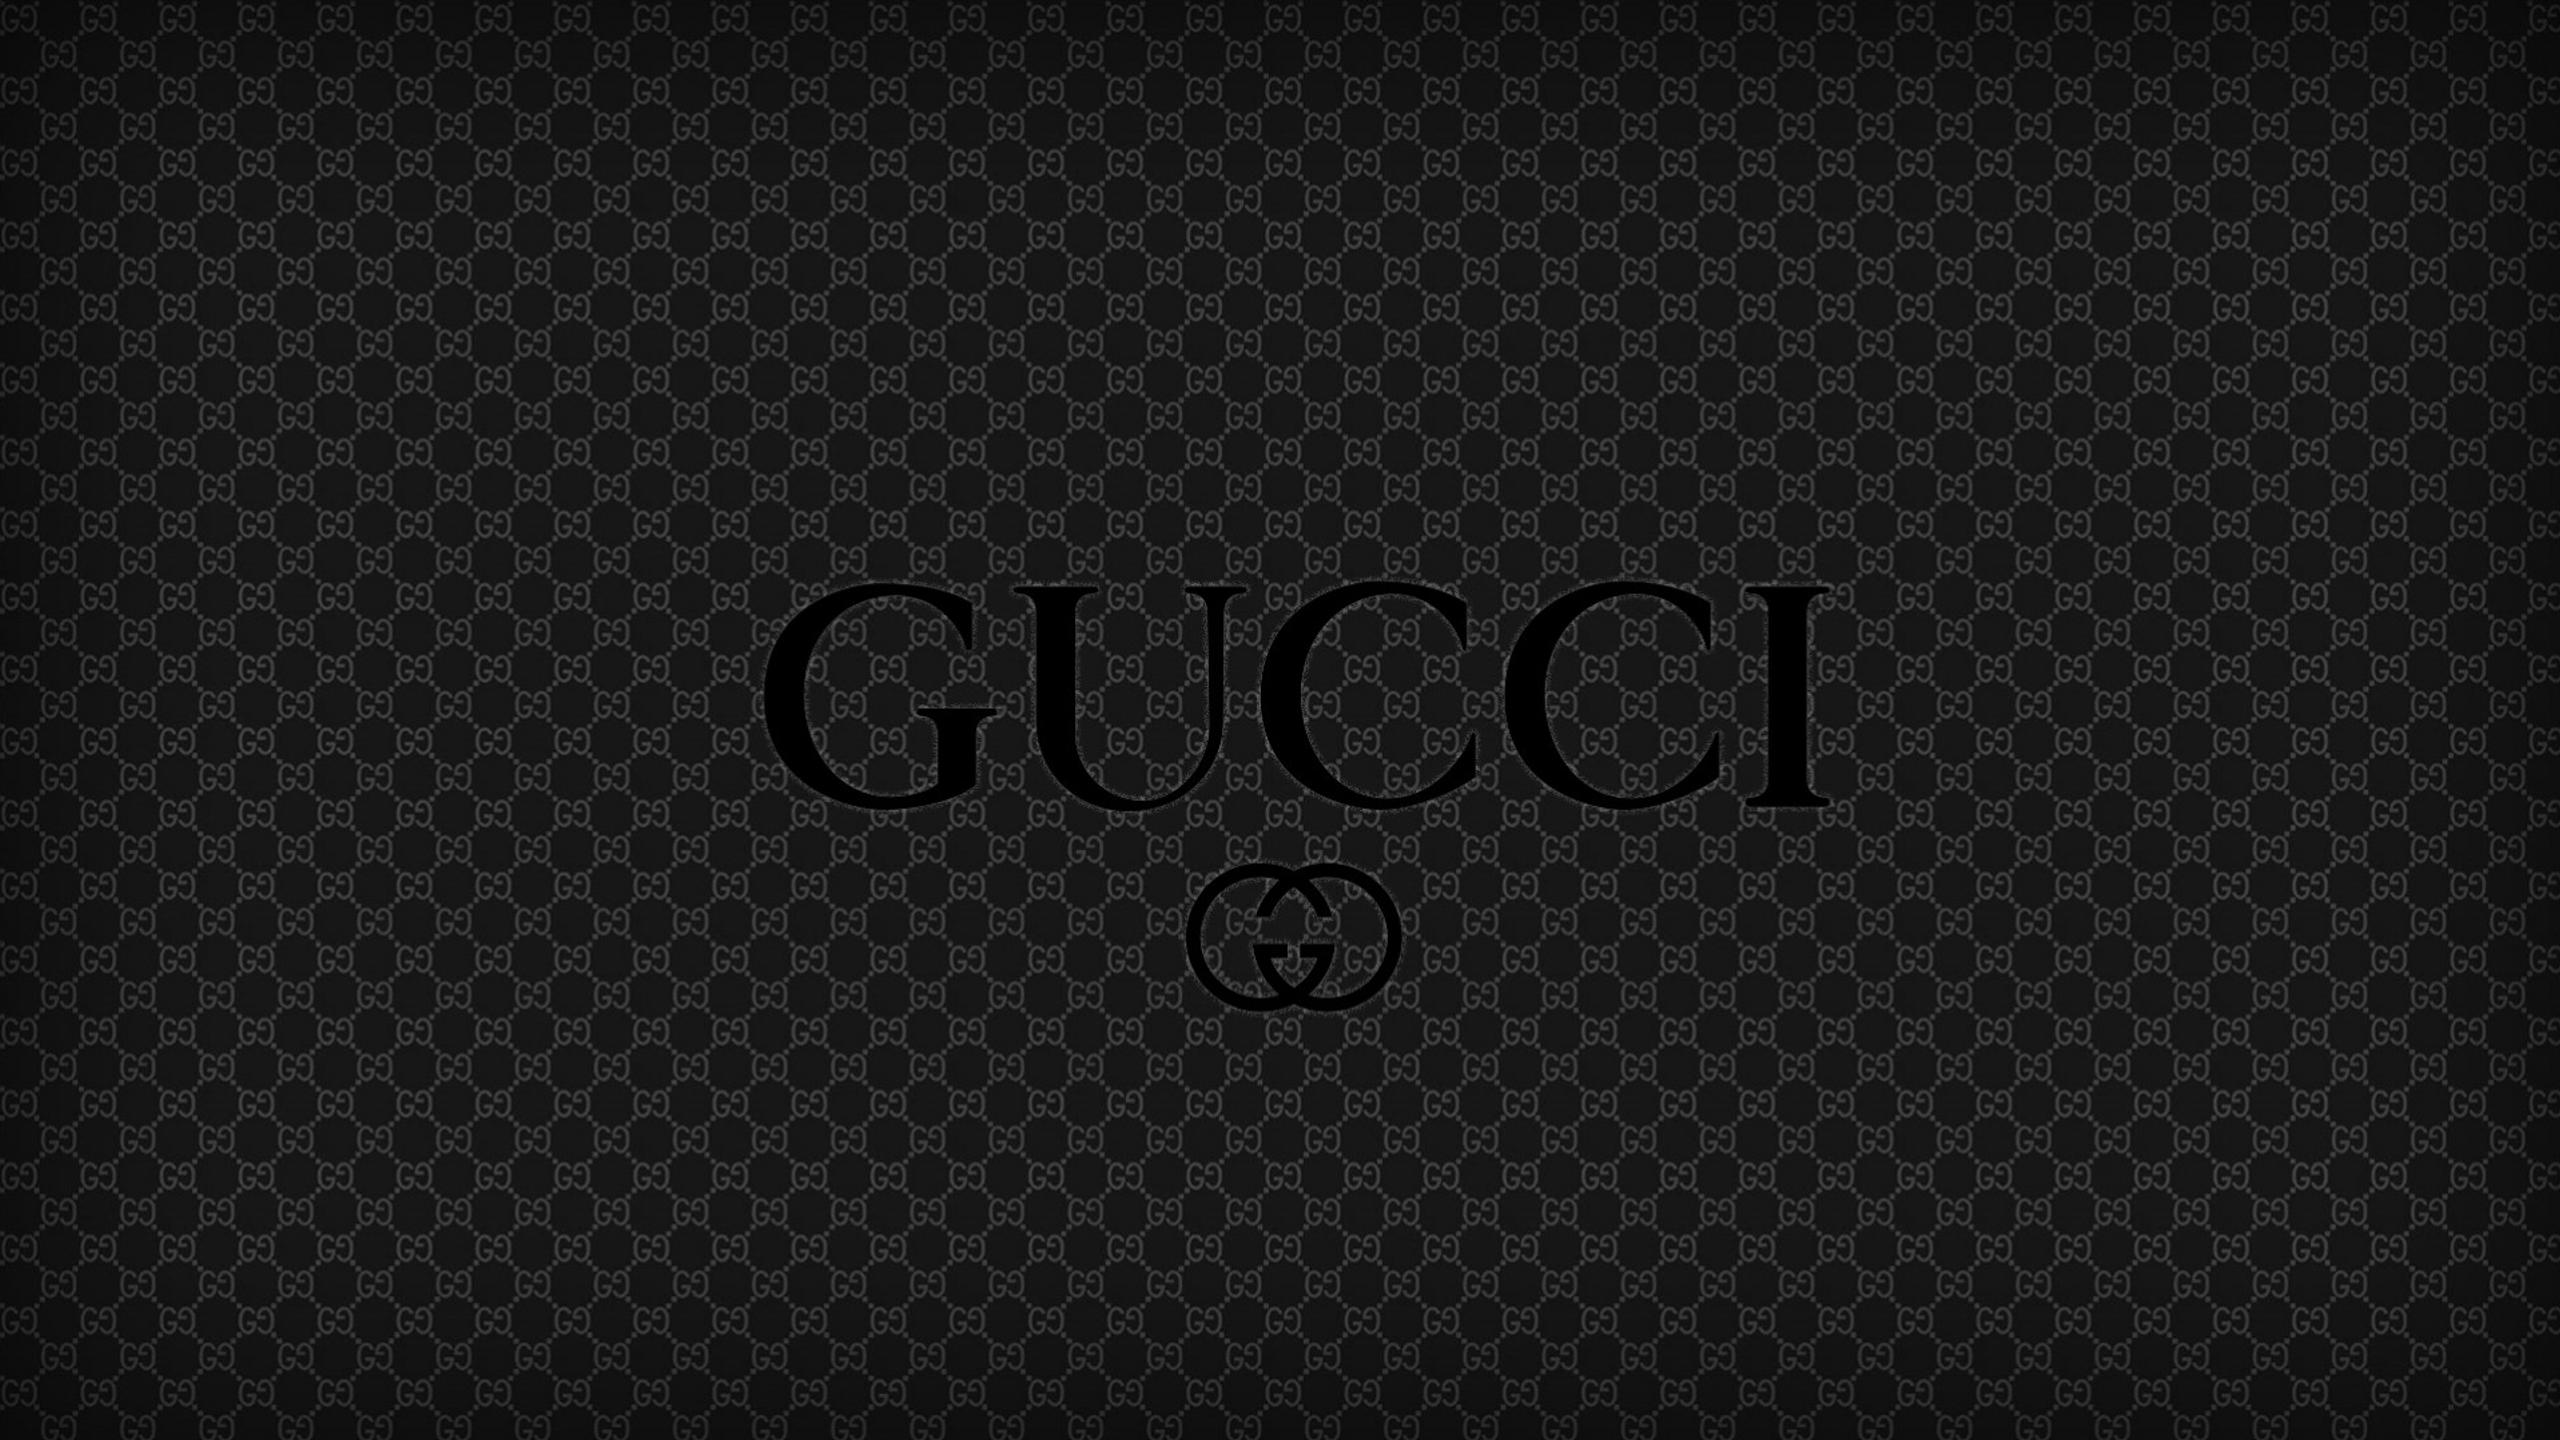 Luxury Brand - Gucci wallpaper